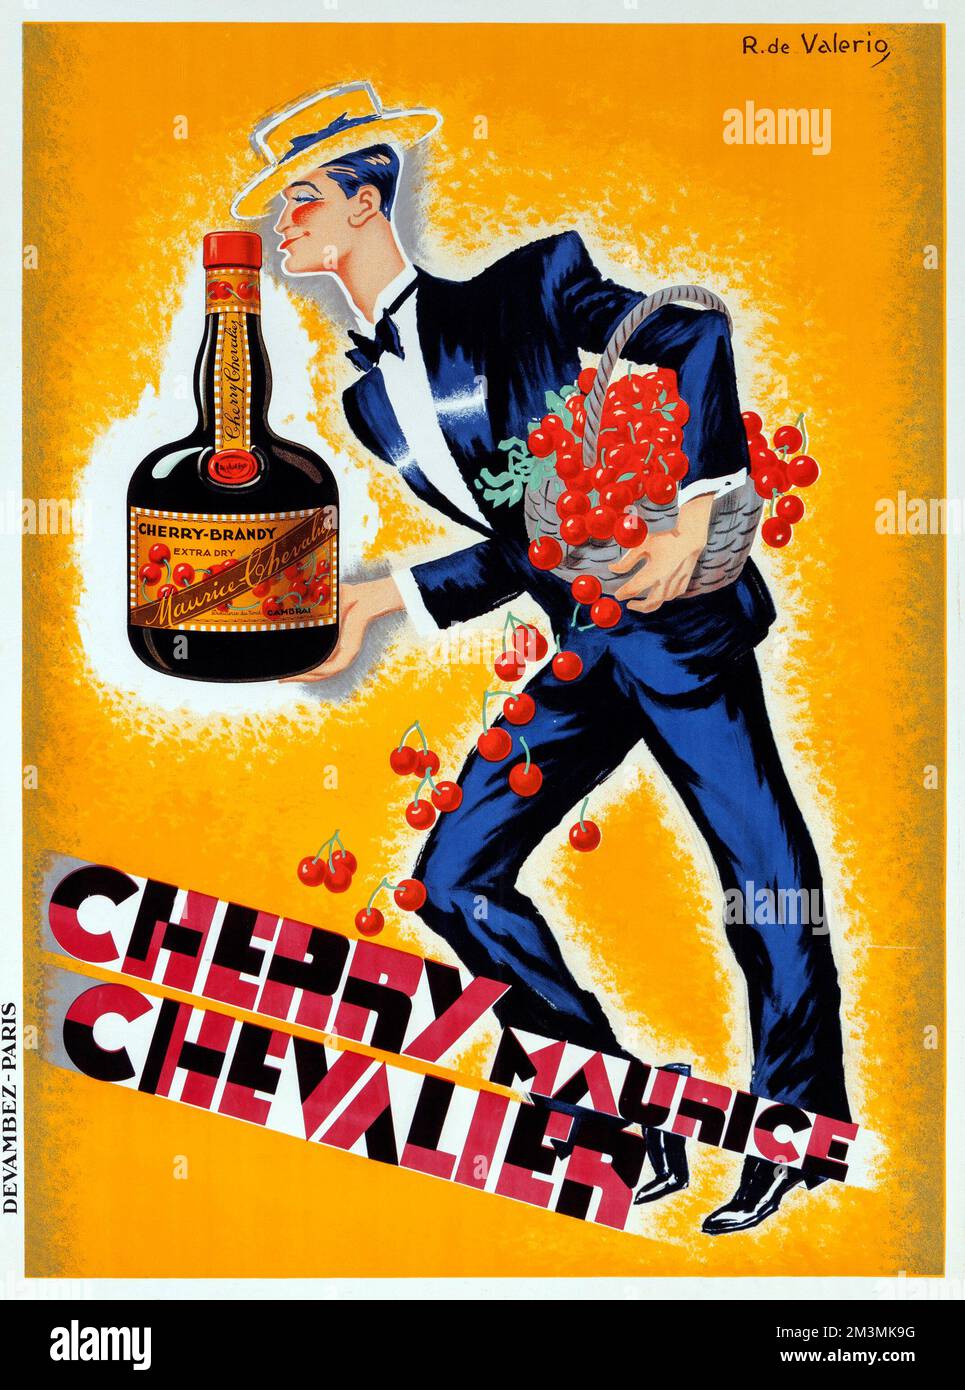 Alcohol advertising - Roger de Valerio (French, 1896-1951). Cherry-Brandy, Maurice Chevalier, c. 1940 Stock Photo